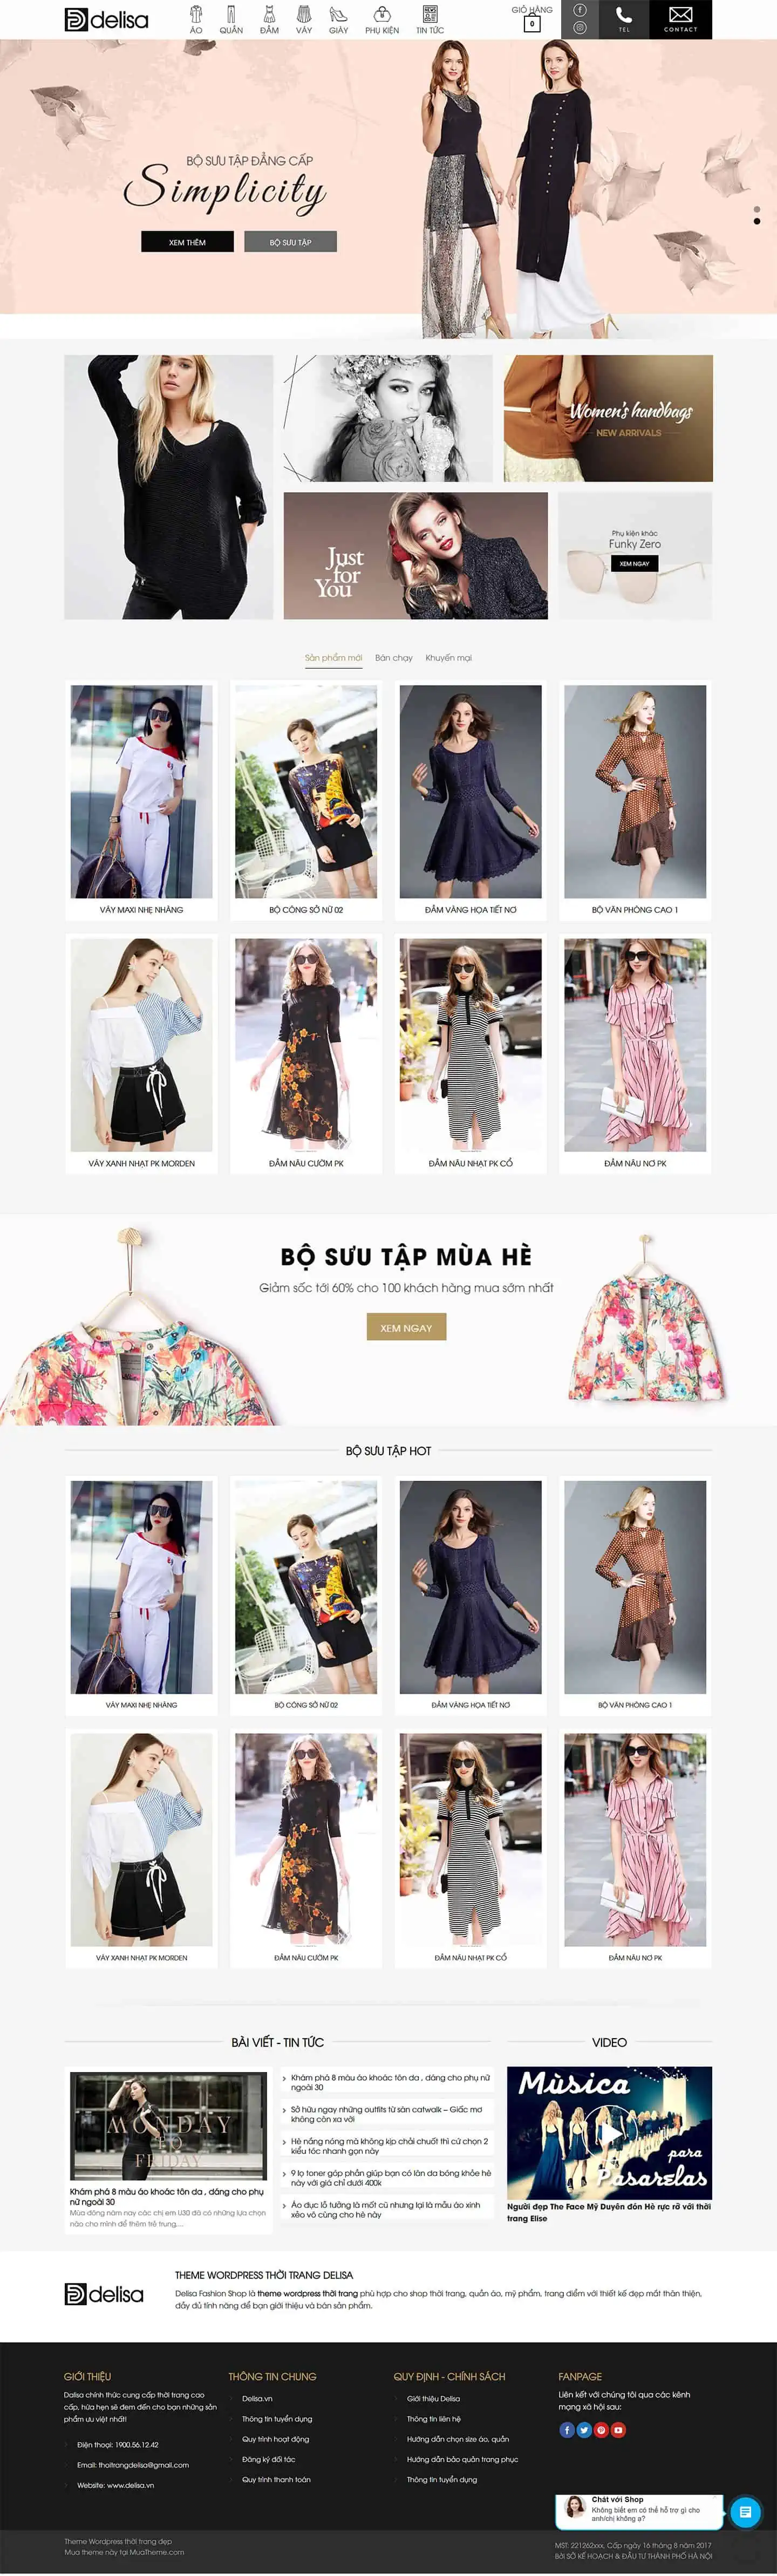 Delisa Fashion Shop – Theme thời trang đẹp 2